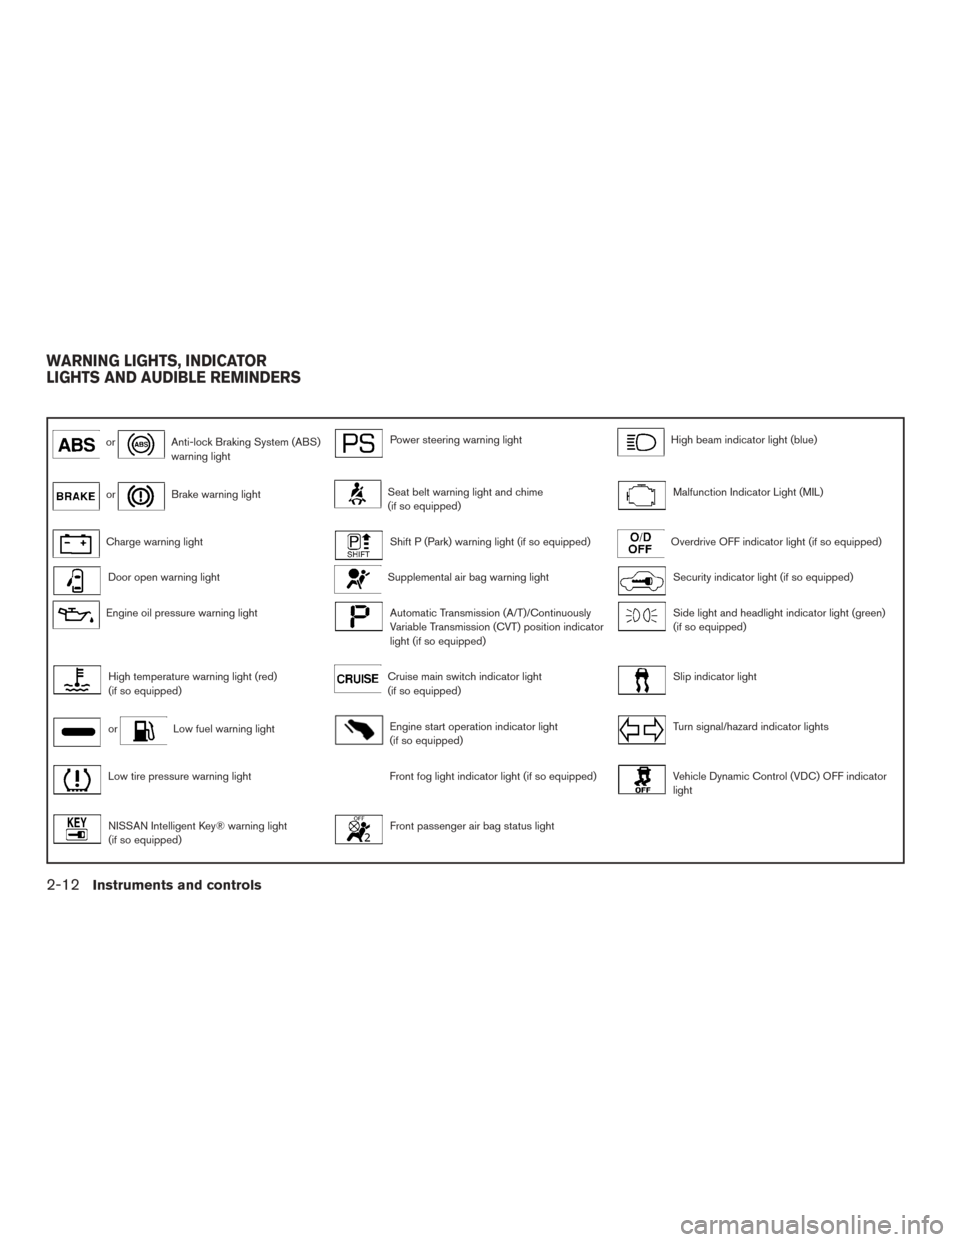 NISSAN VERSA SEDAN 2017 2.G Owners Manual orAnti-lock Braking System (ABS)
warning lightPower steering warning lightHigh beam indicator light (blue)
orBrake warning lightSeat belt warning light and chime
(if so equipped)Malfunction Indicator 